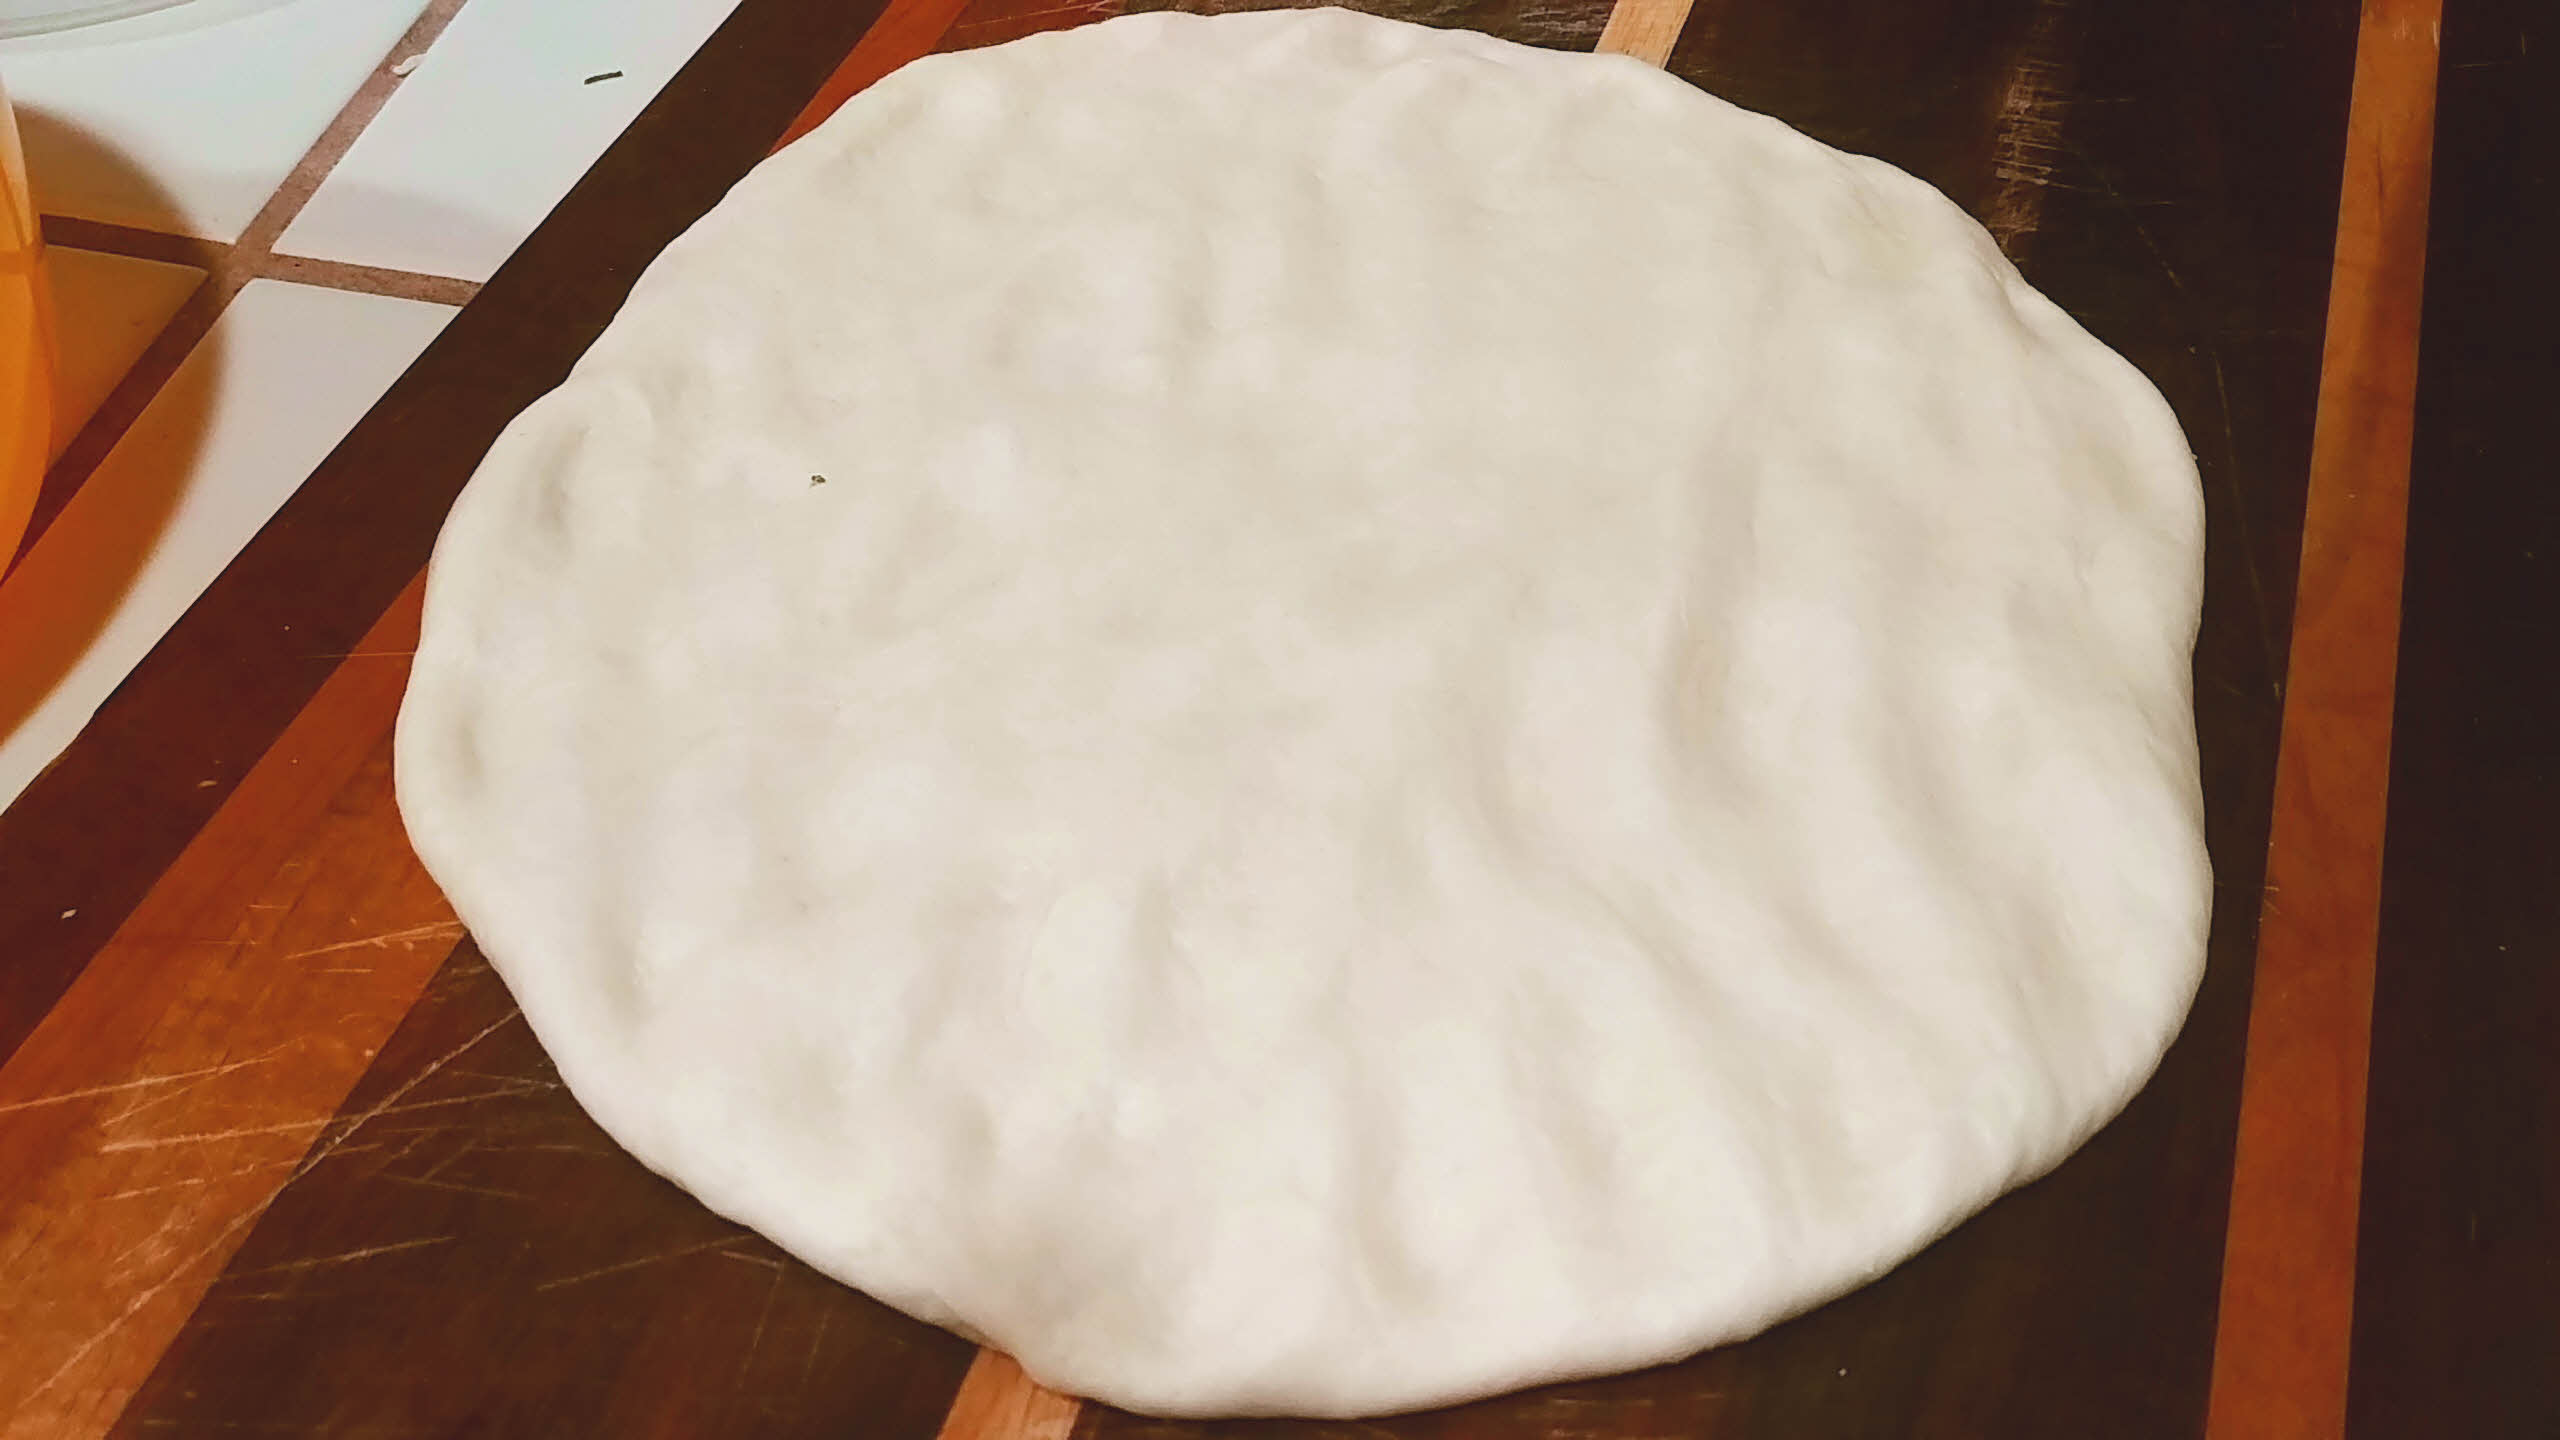 Spread the dough in a 10 inch diameter